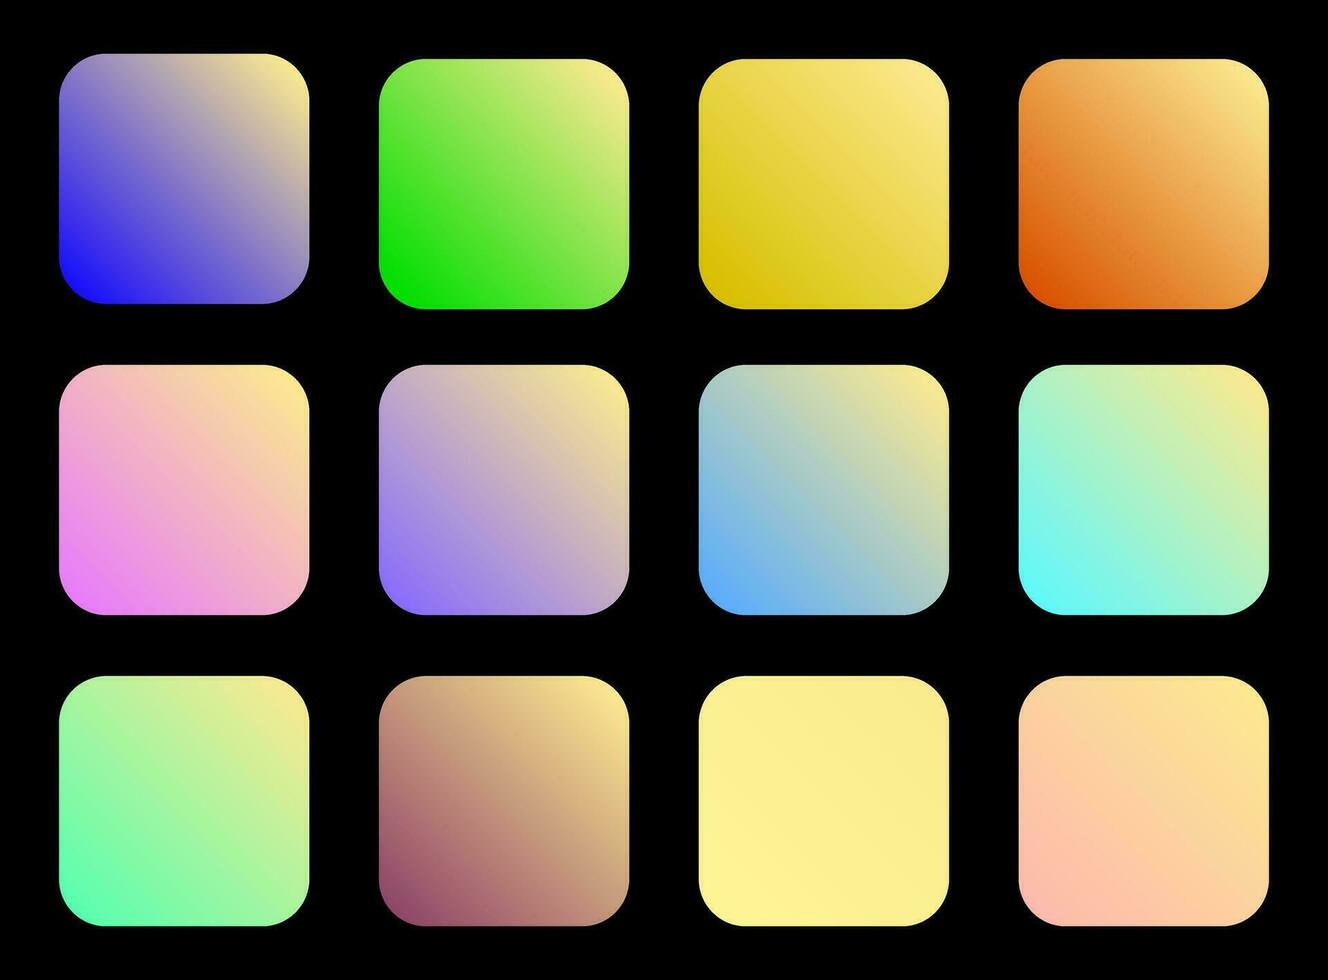 colorida parmesão cor sombra linear gradiente paleta amostras rede kit arredondado quadrados modelo conjunto vetor